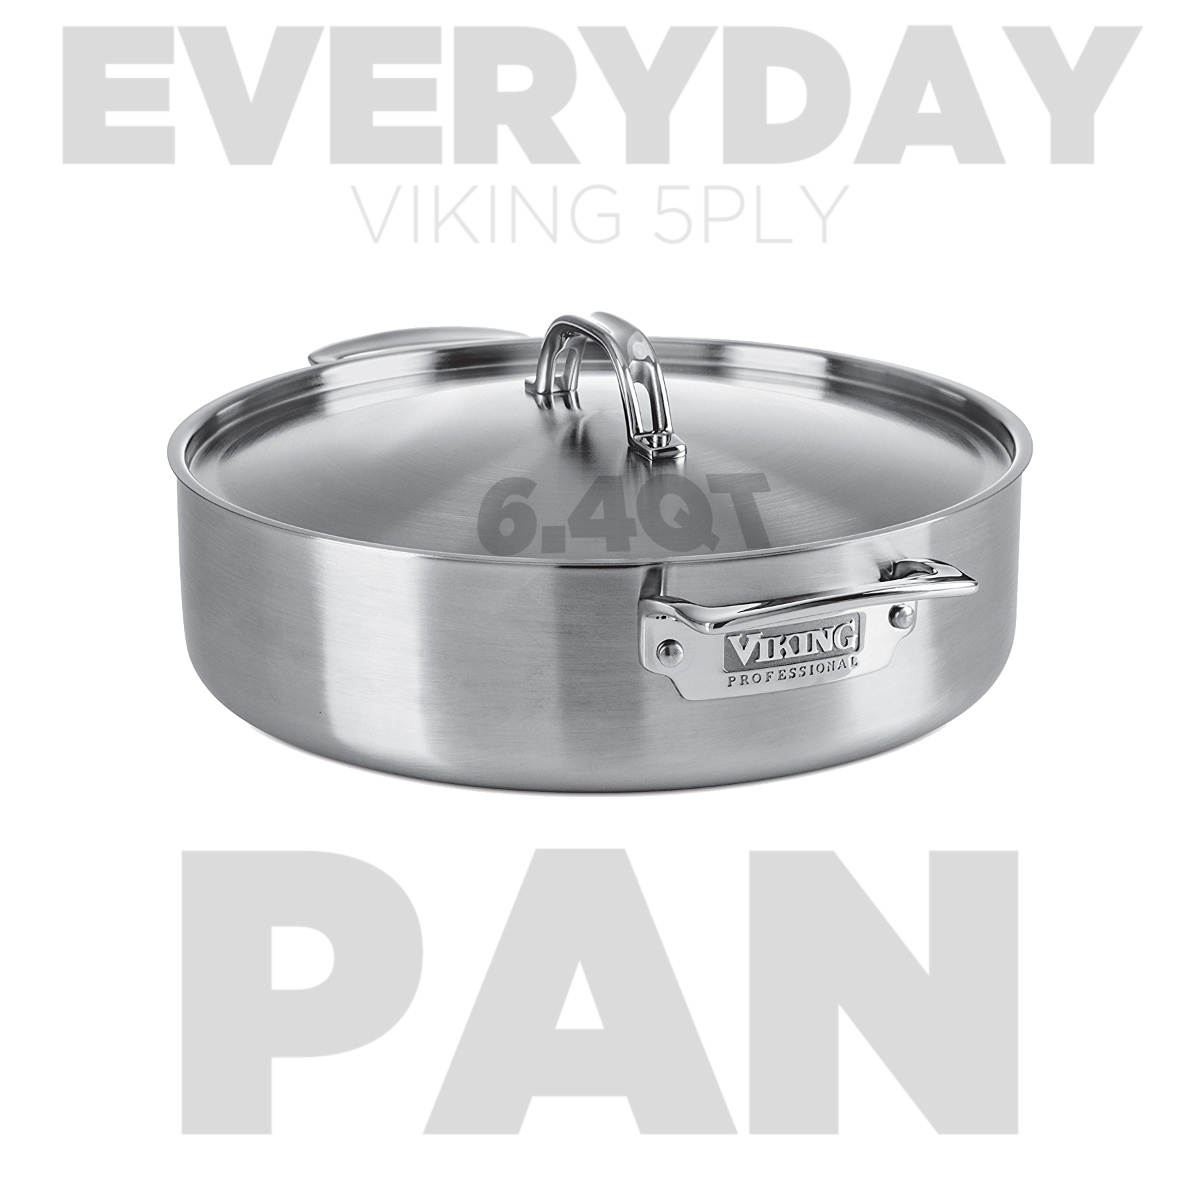 https://thejazzchef.com/wp-content/uploads/2018/02/Viking-5ply-Everyday-6.4Q-Pan.jpg